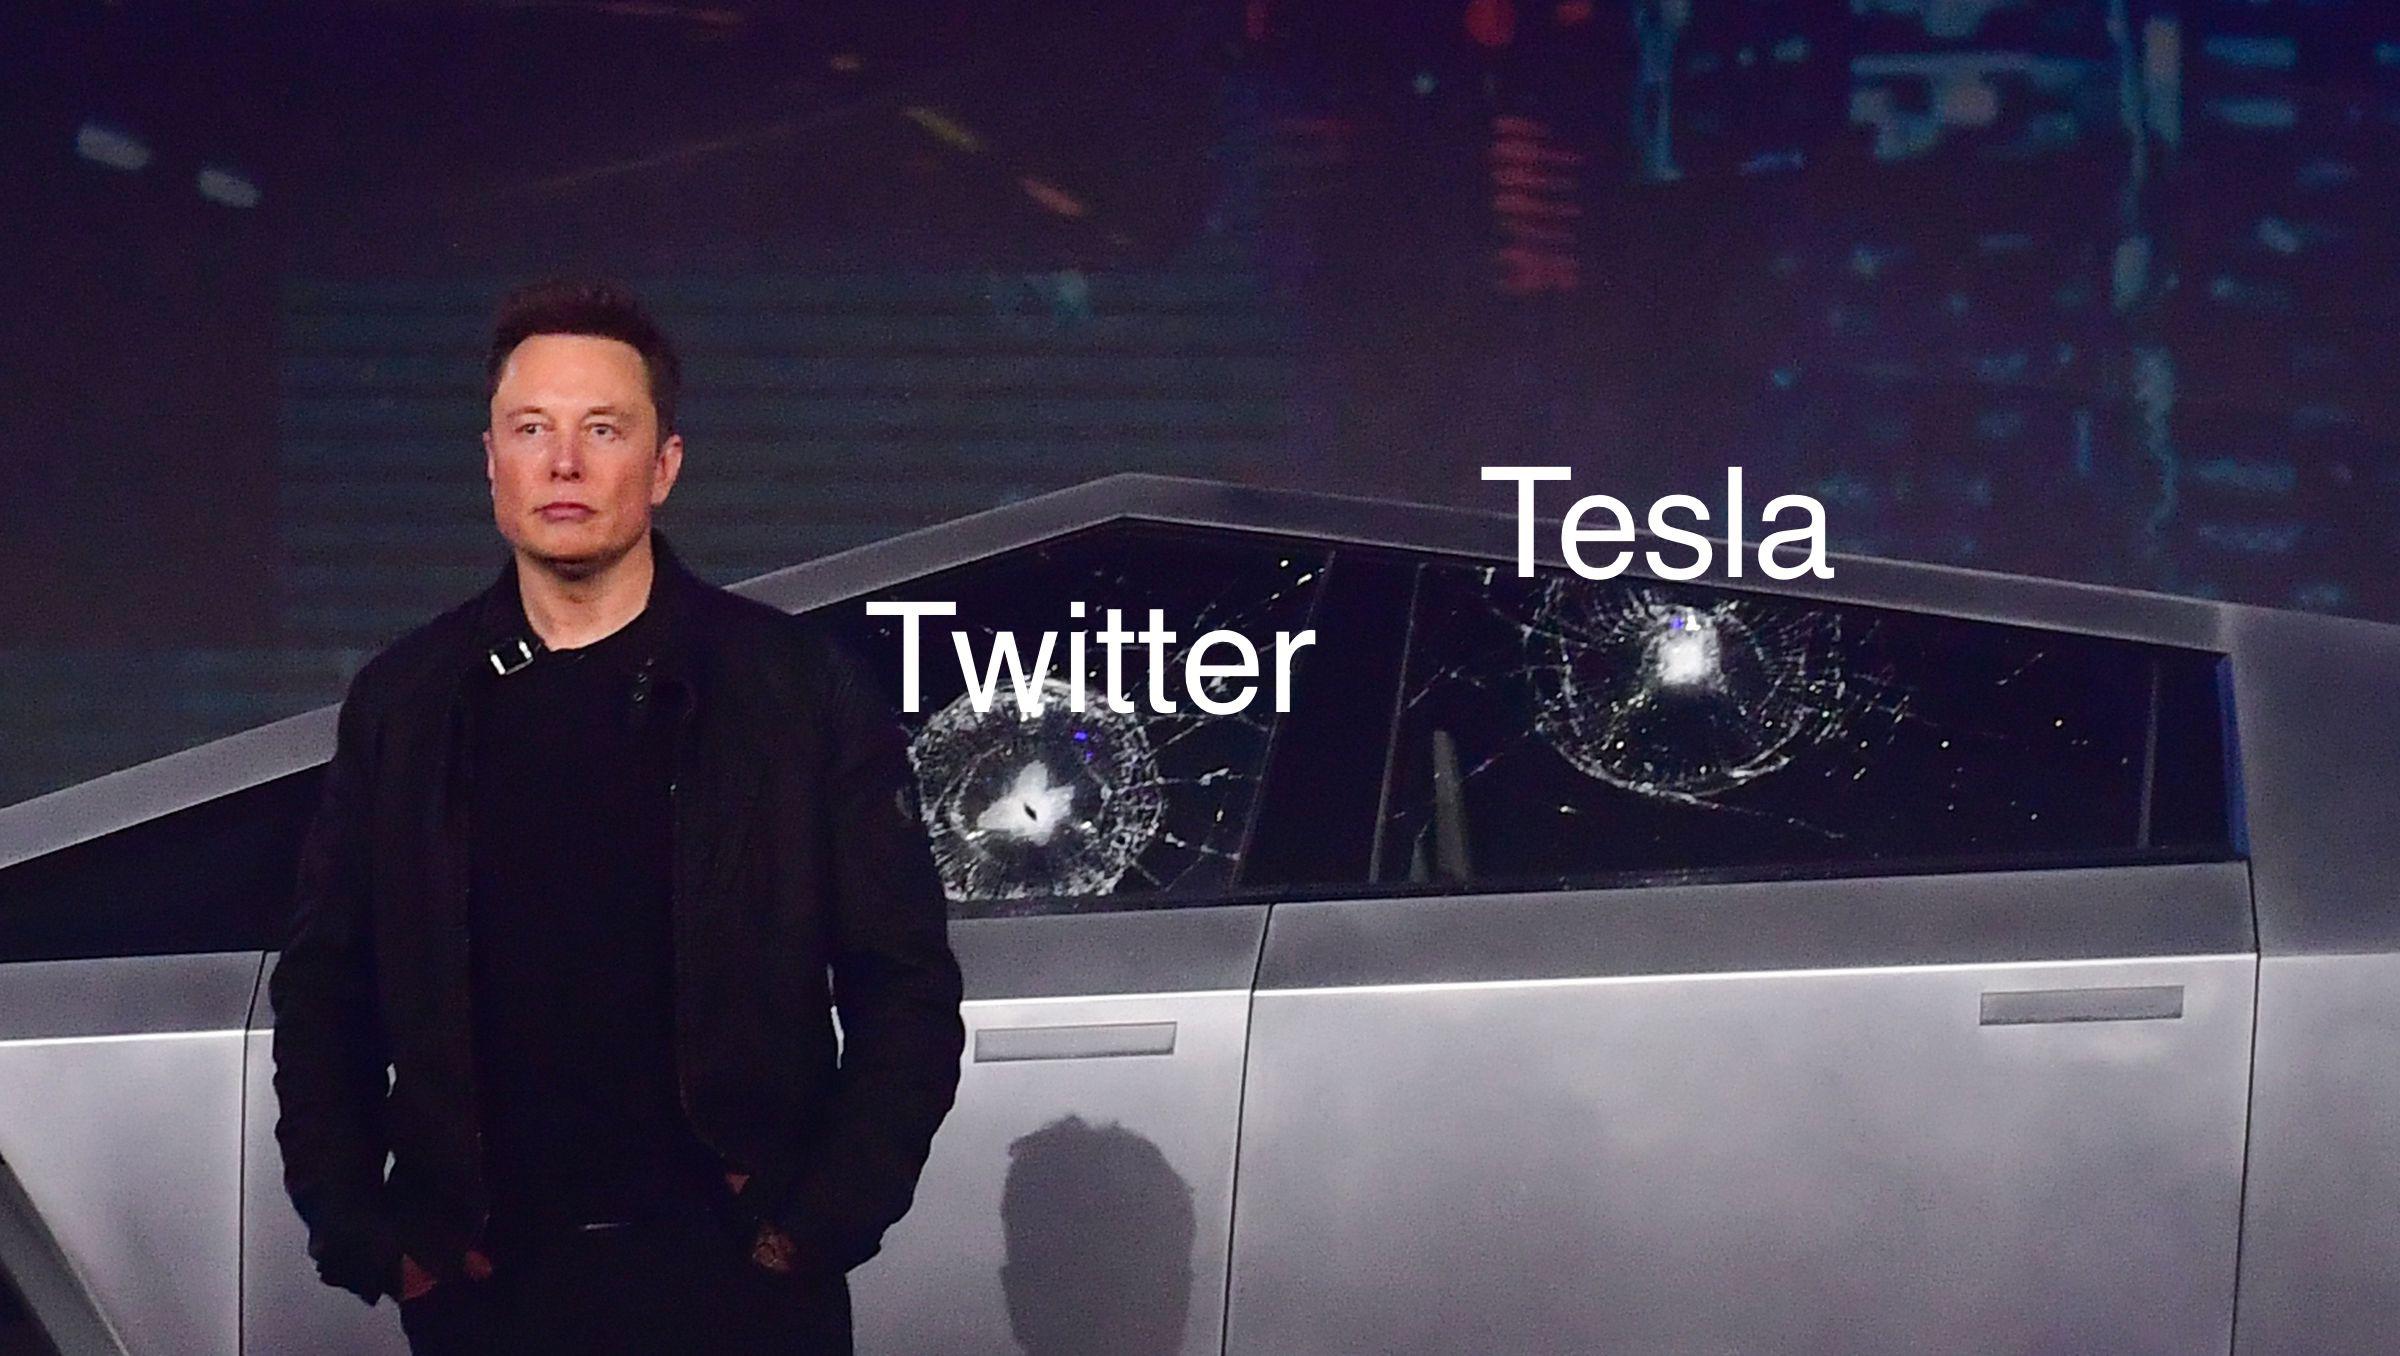 dank and savage memes - tesla cybertruck window - Twitter Tesla 1